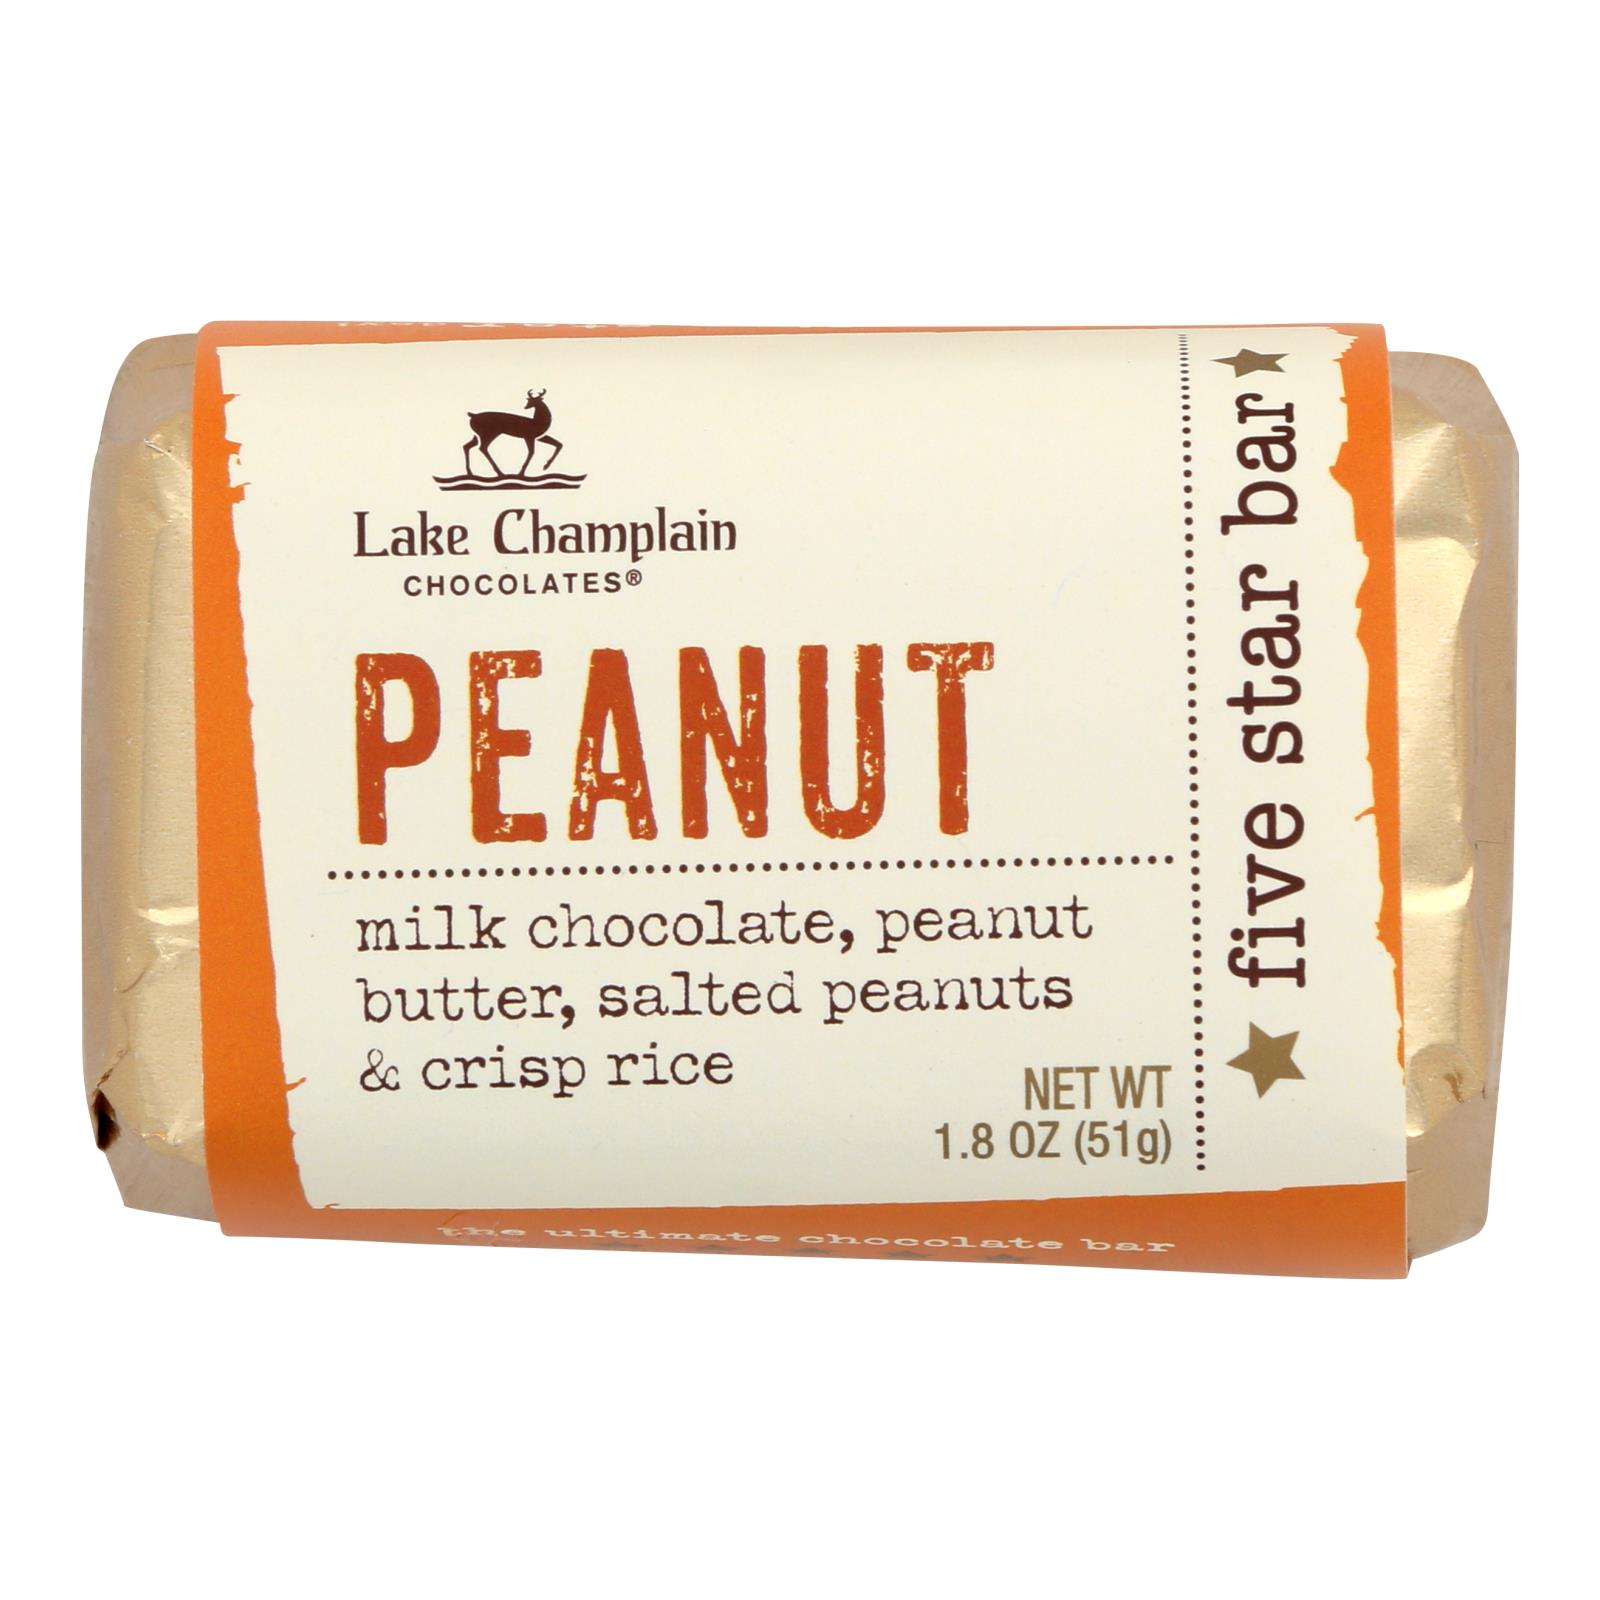 Lake Champlain Chocolates Peanut Five Star Bar - 16개 묶음상품 - 1.8 OZ